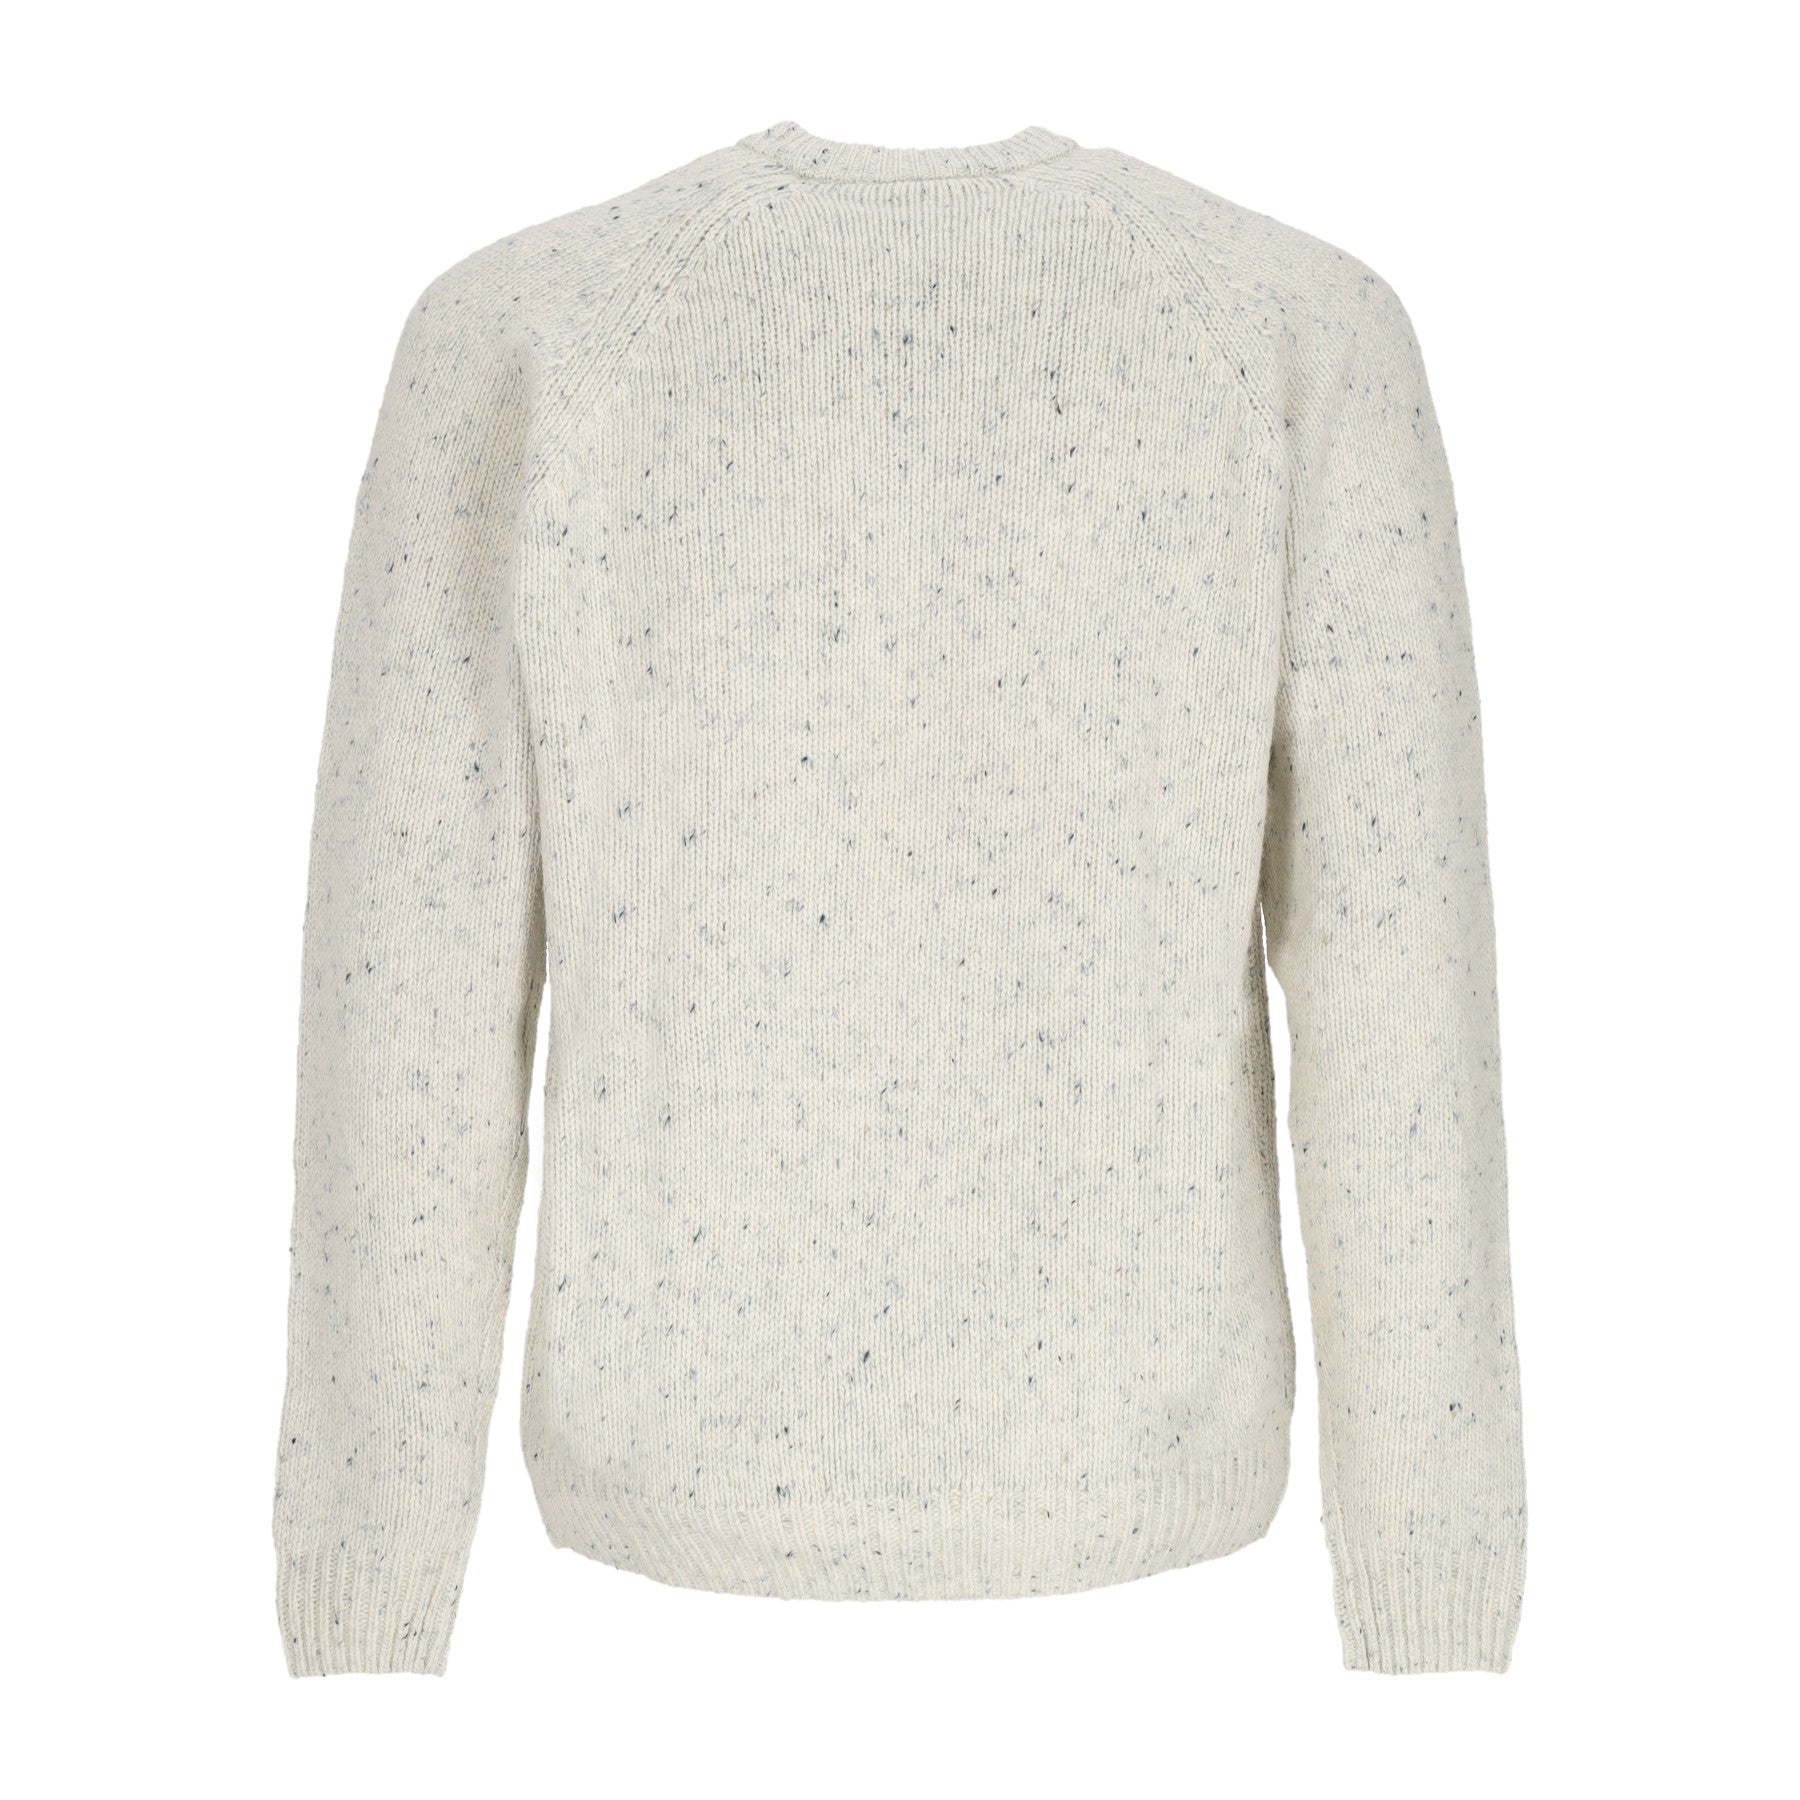 Maglione Uomo Anglistic Sweater Speckled Salt I010977